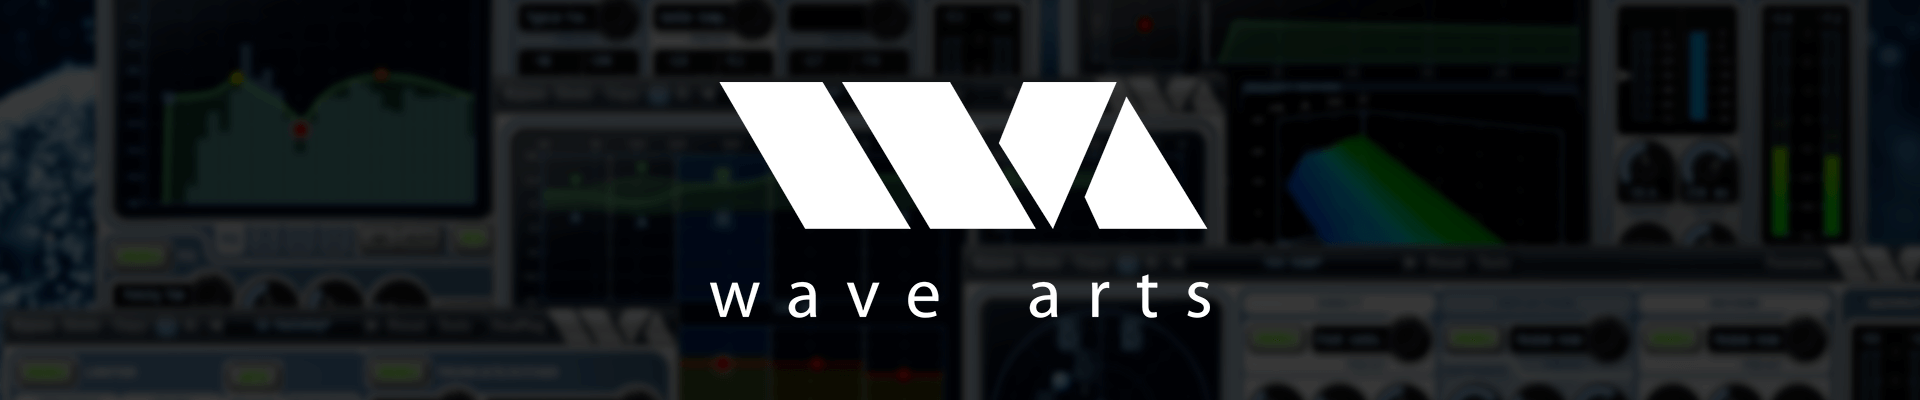 Wave Arts Banner